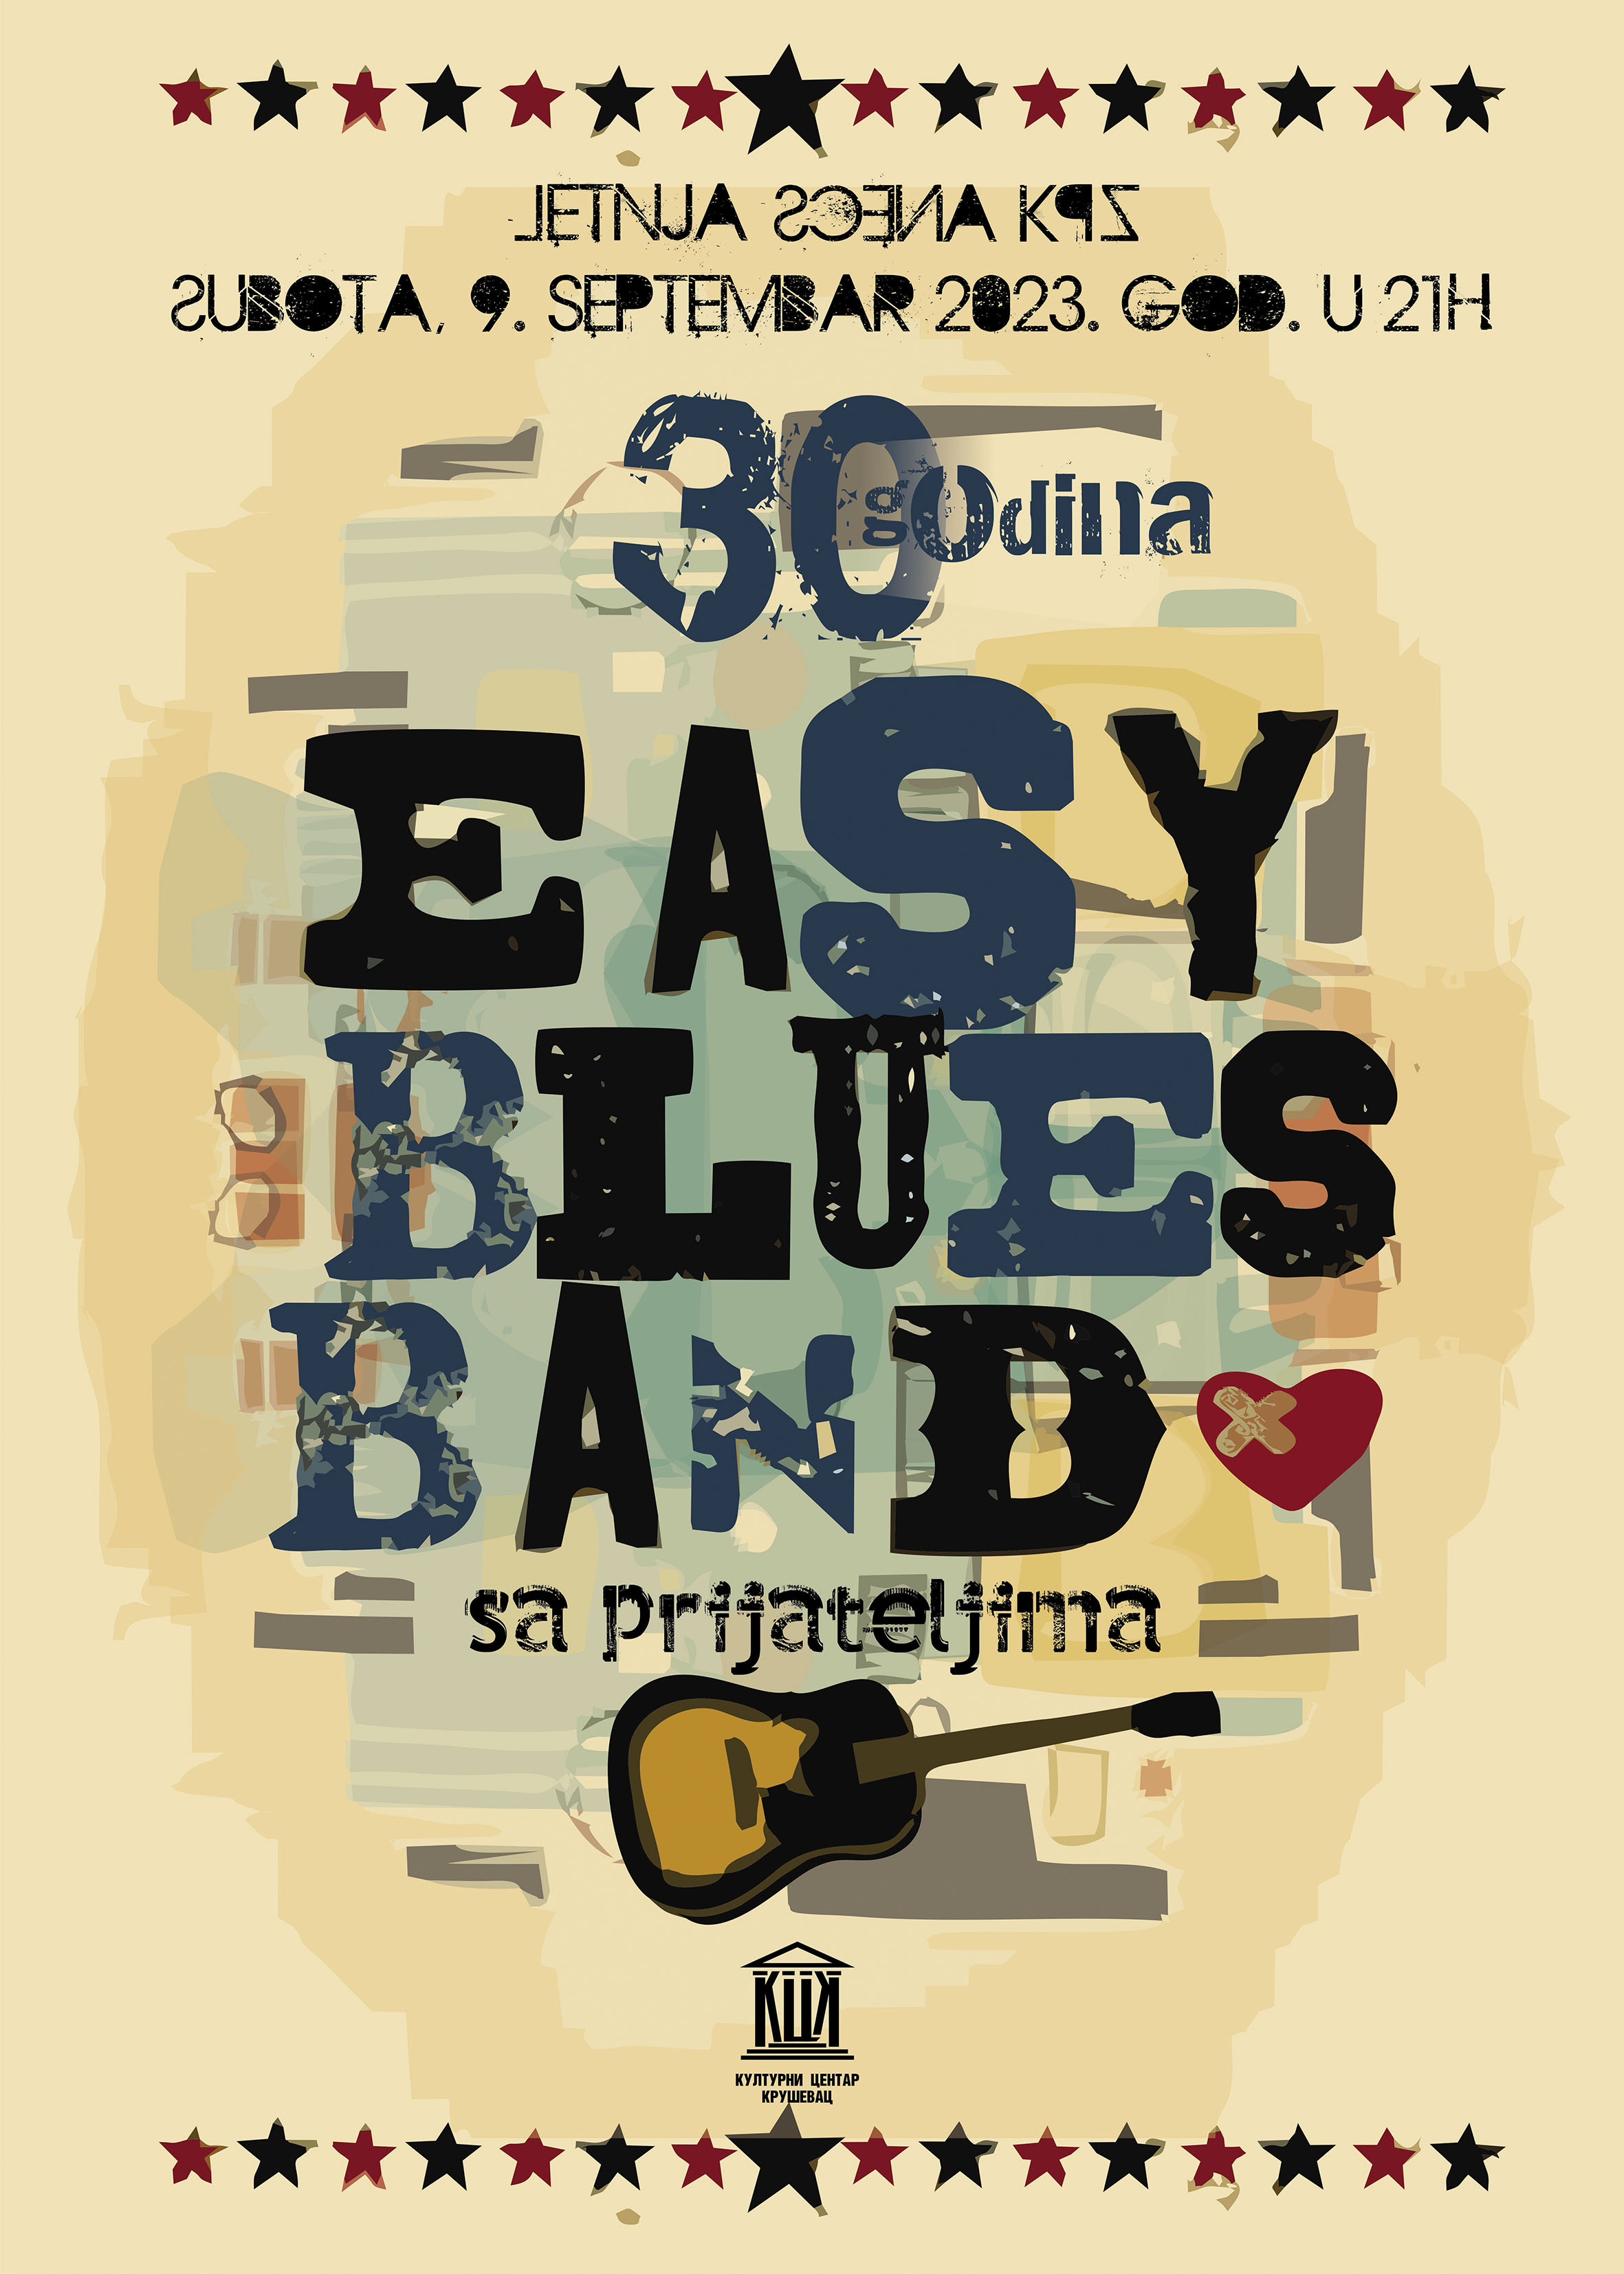 Easy Blues Band plakat